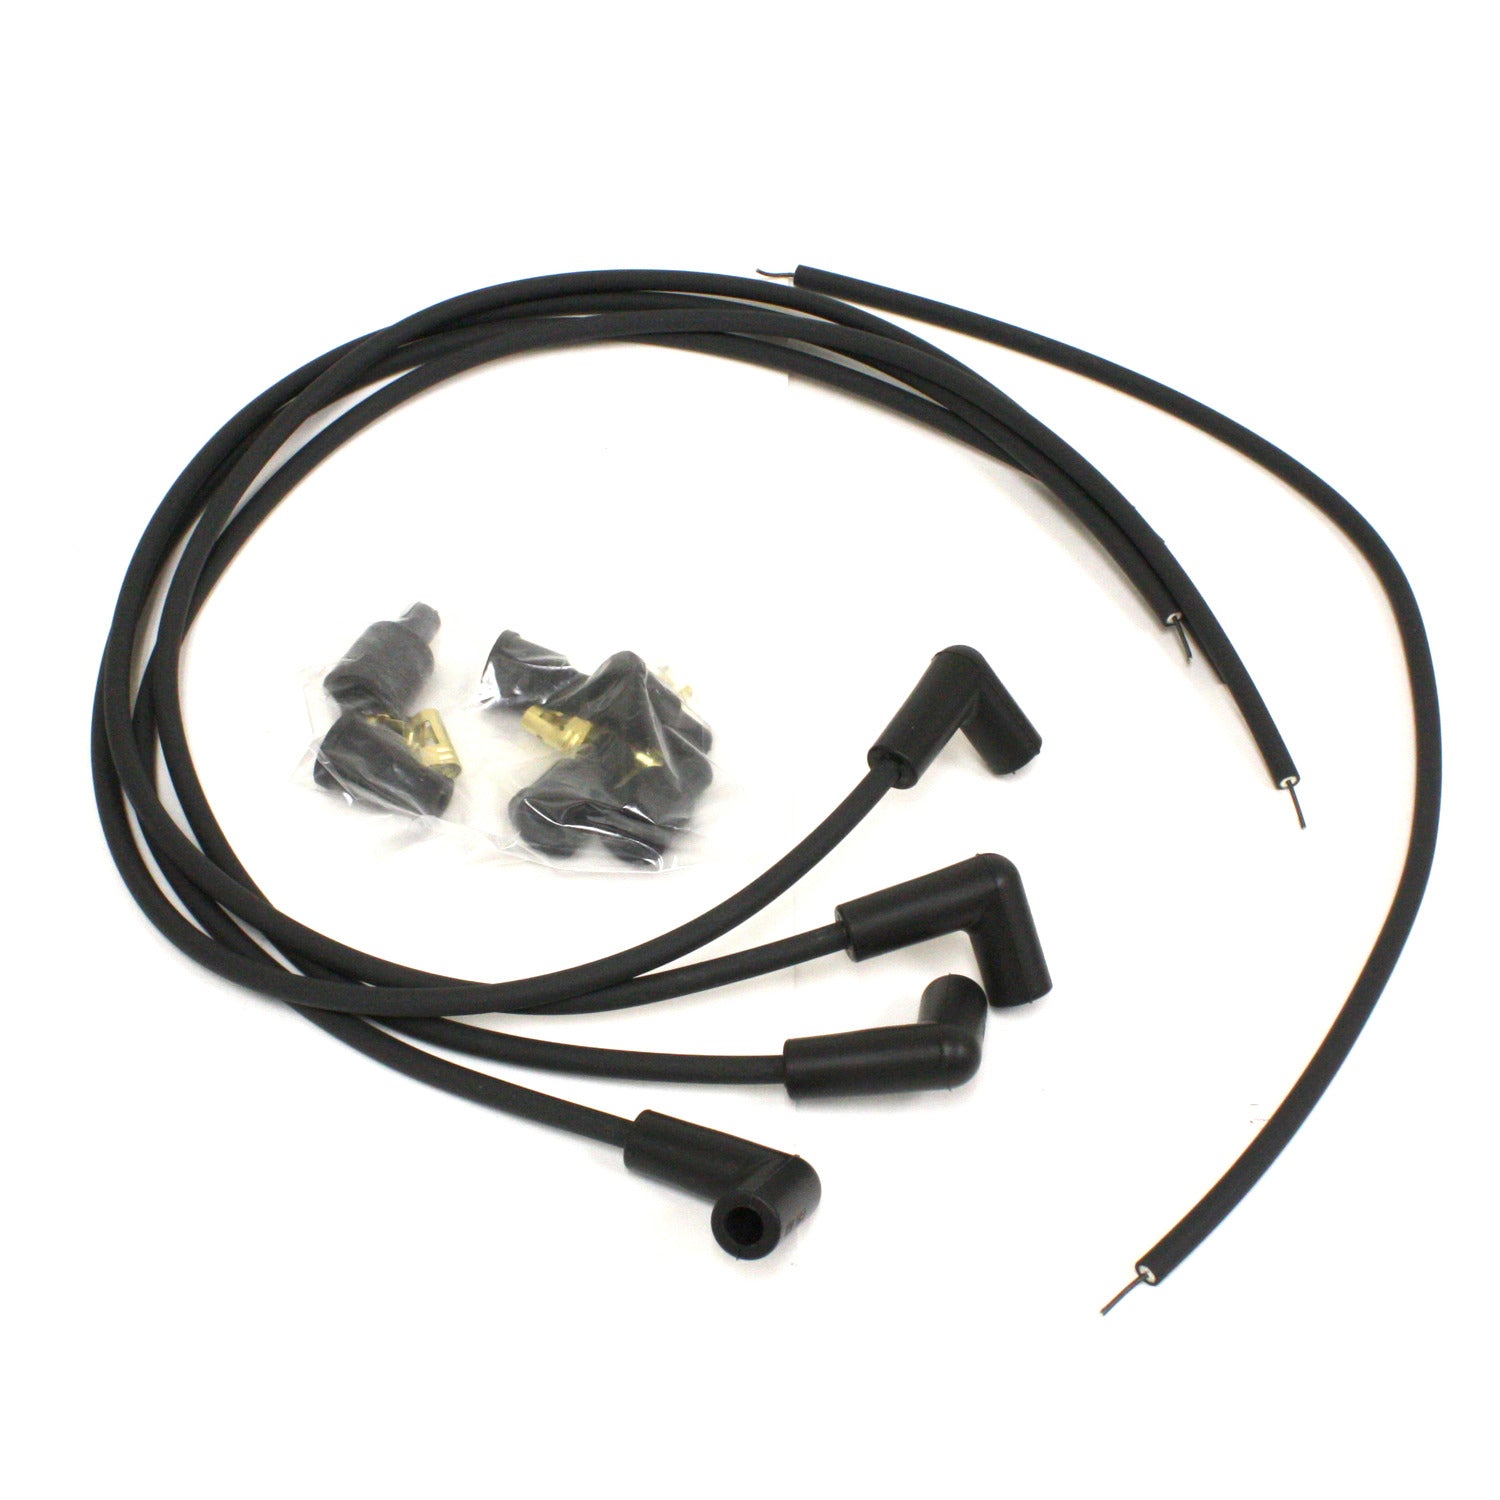 PerTronix 704190 Flame-Thrower Spark Plug Wires 4 cyl British Universal 90 Degree Black